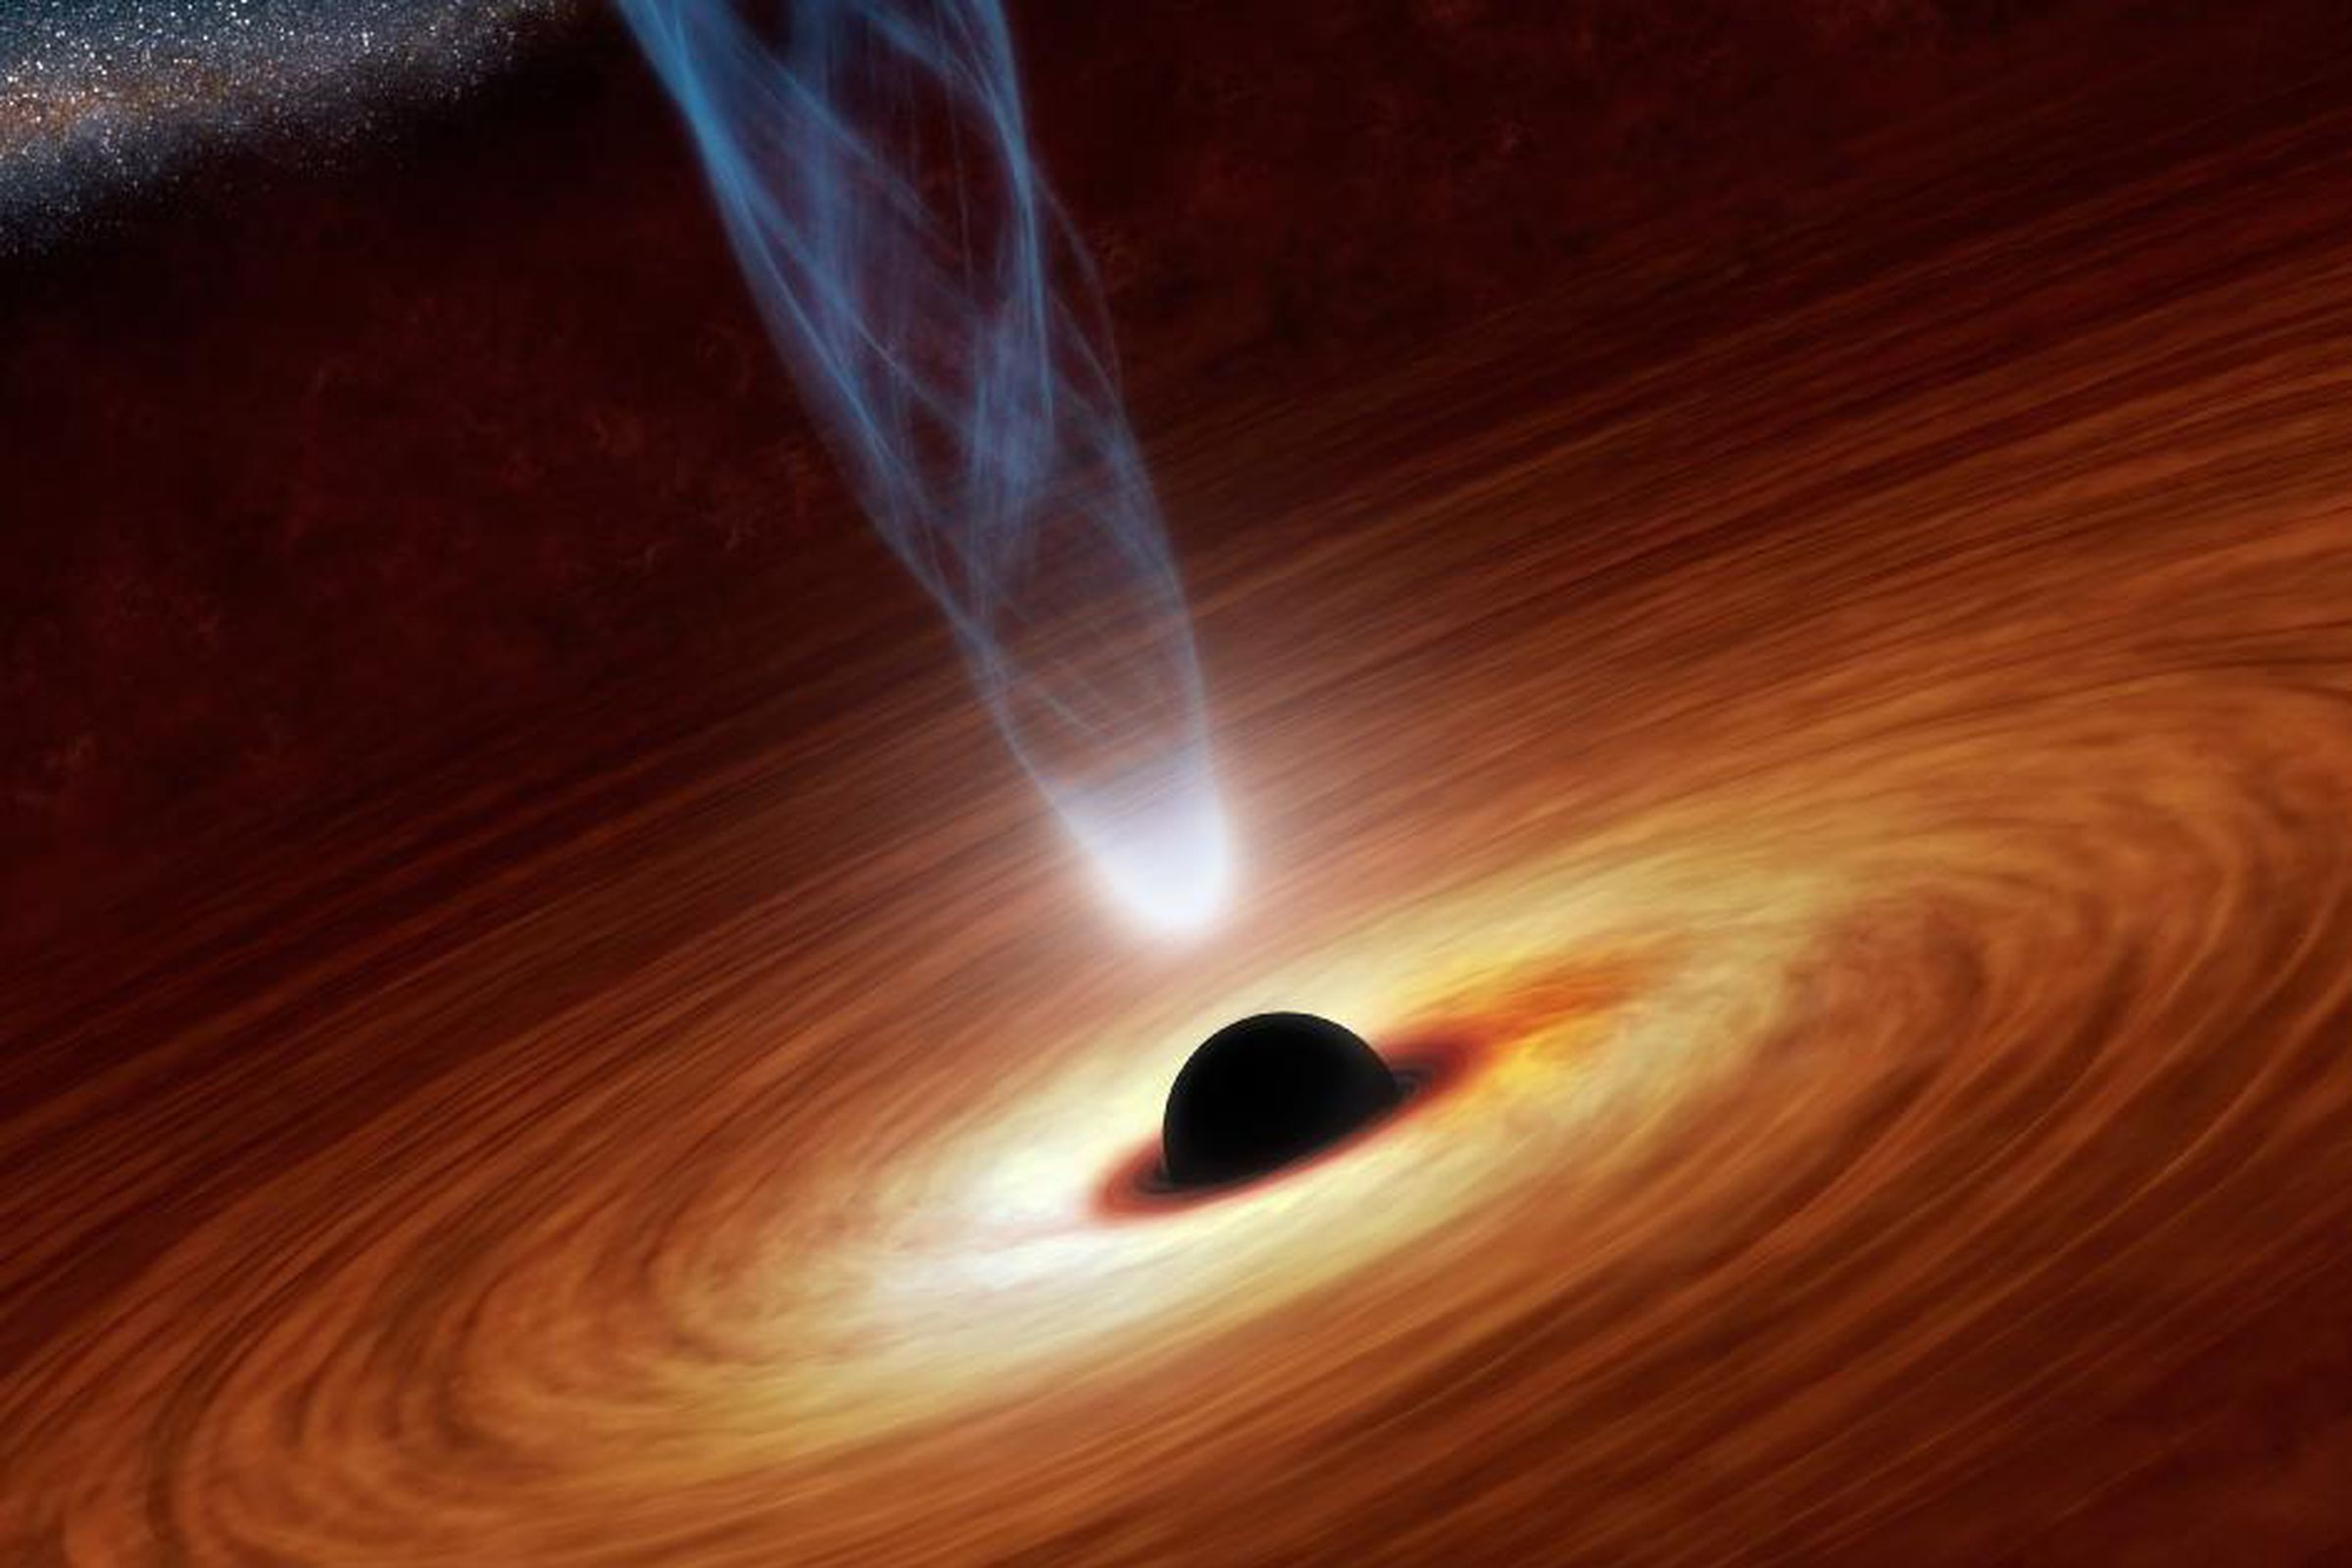 NASA black hole art